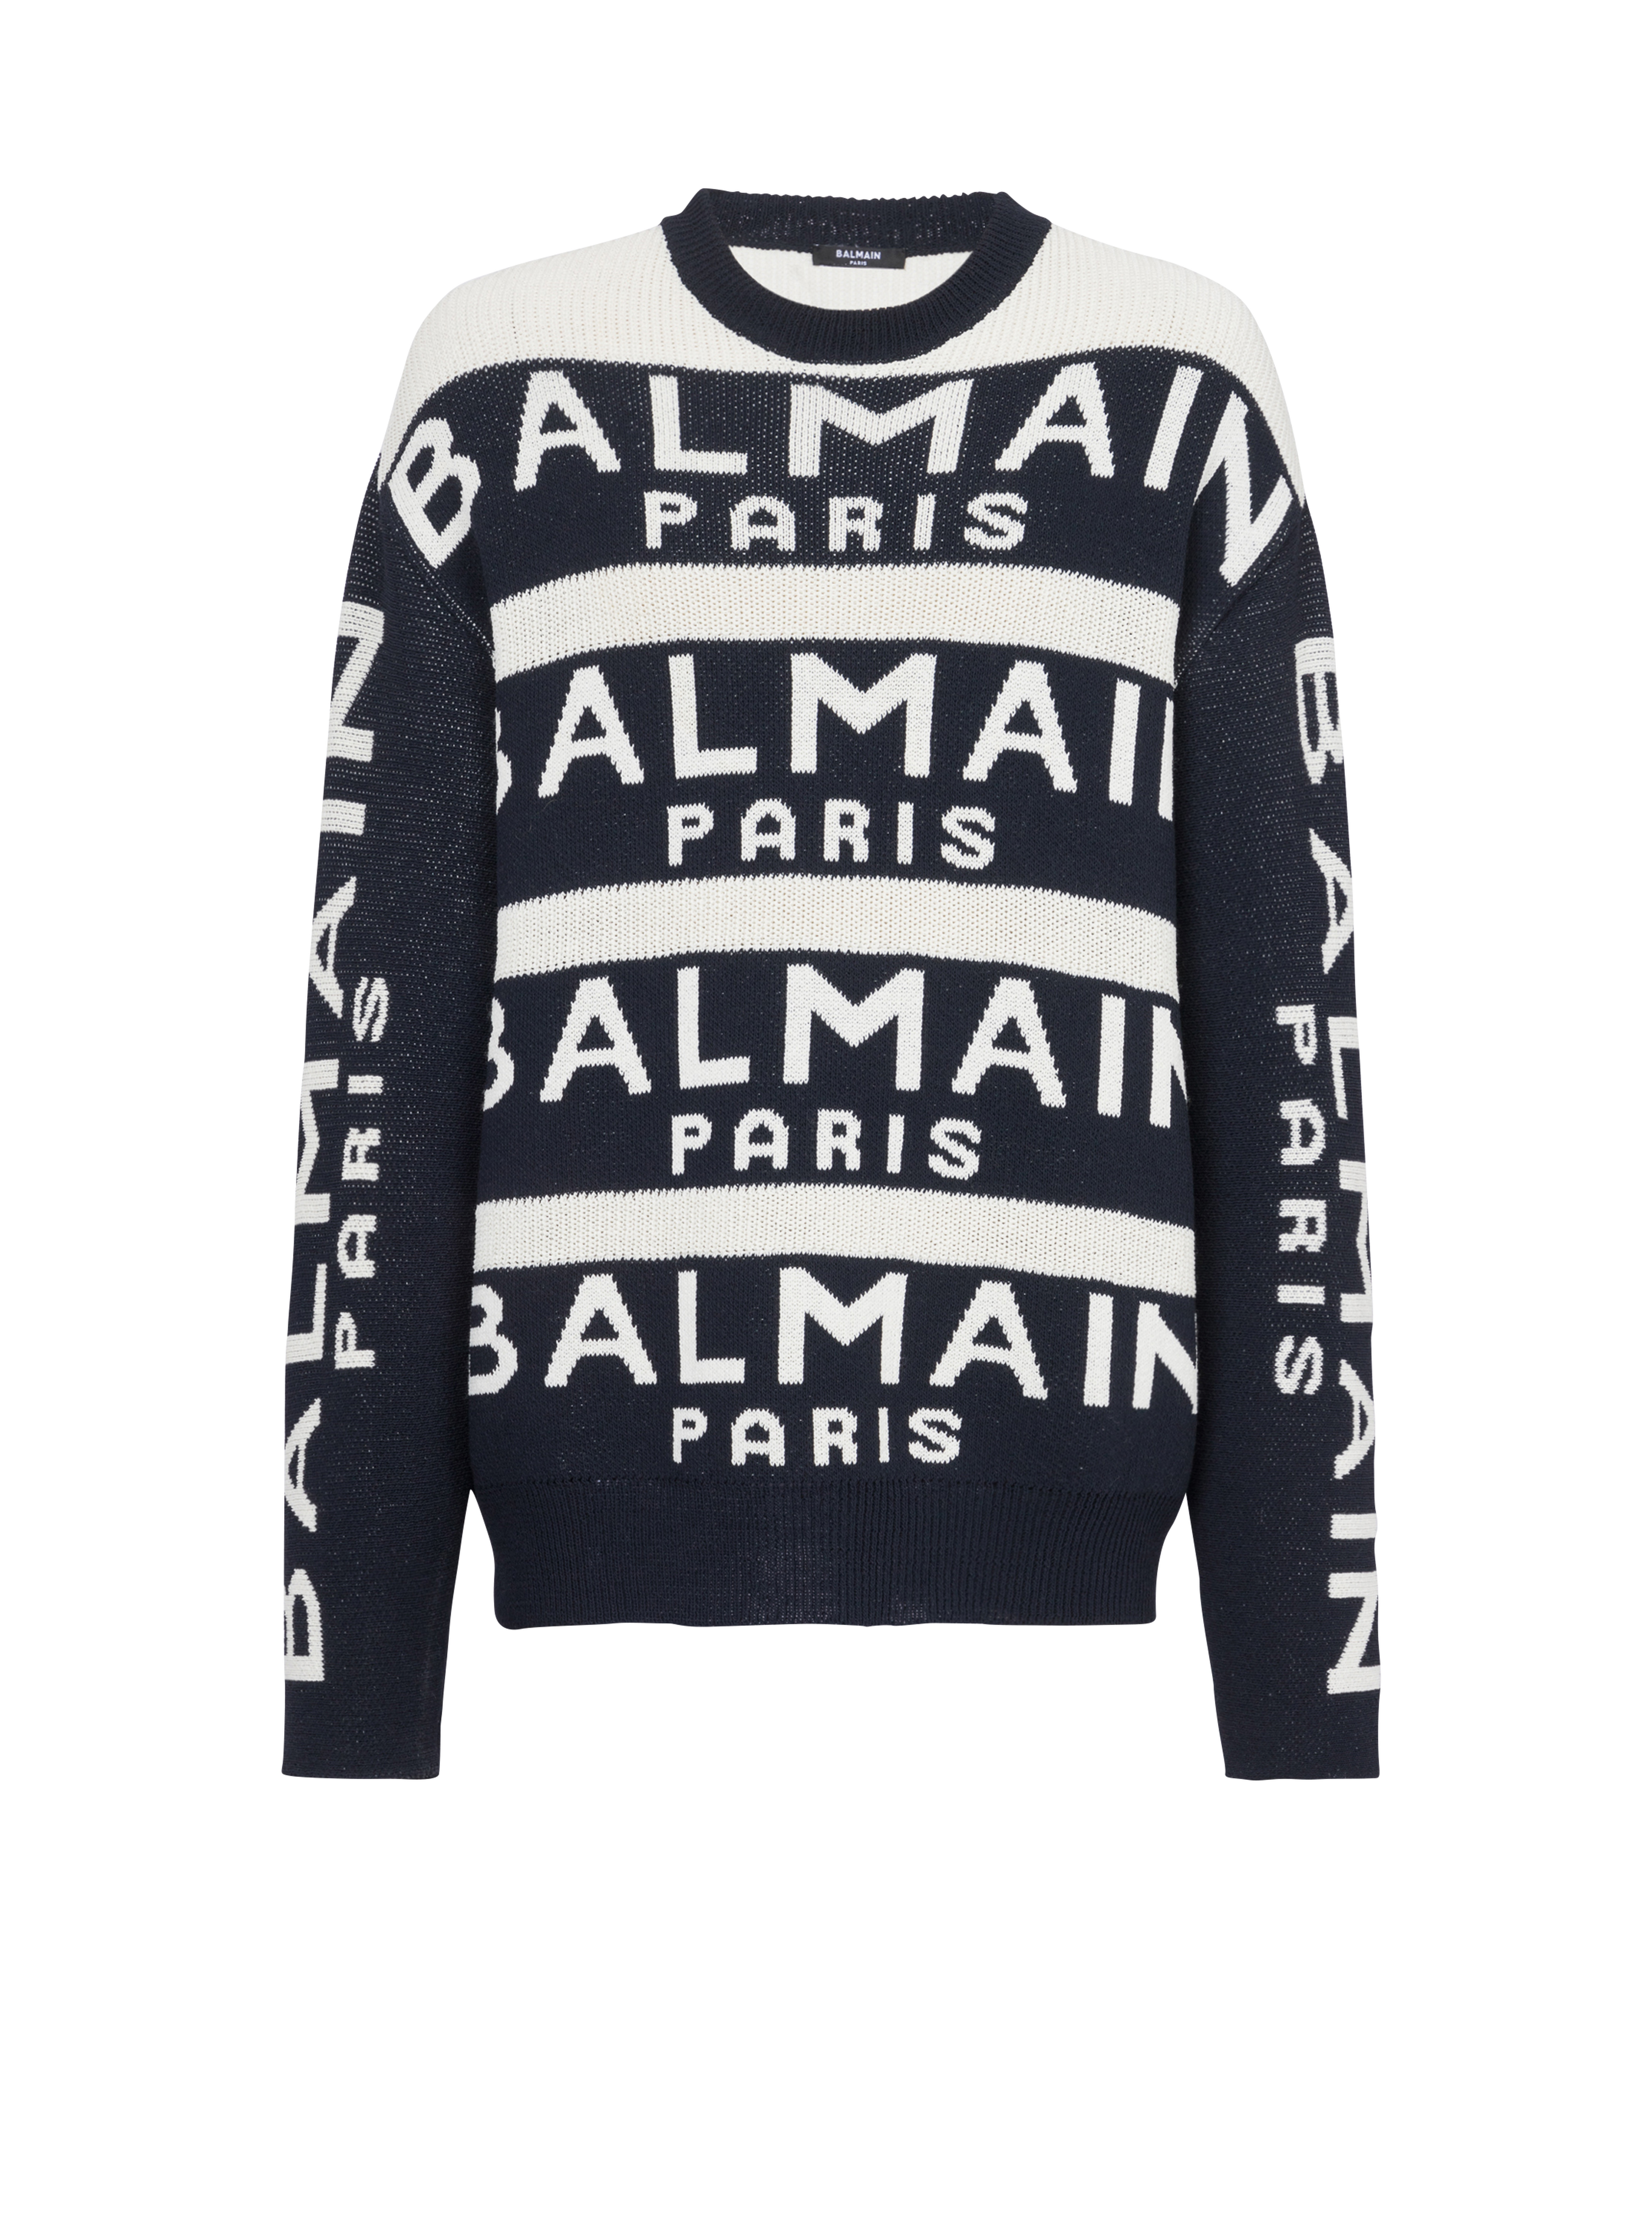 Sweater embroidered with Balmain Paris logo, black